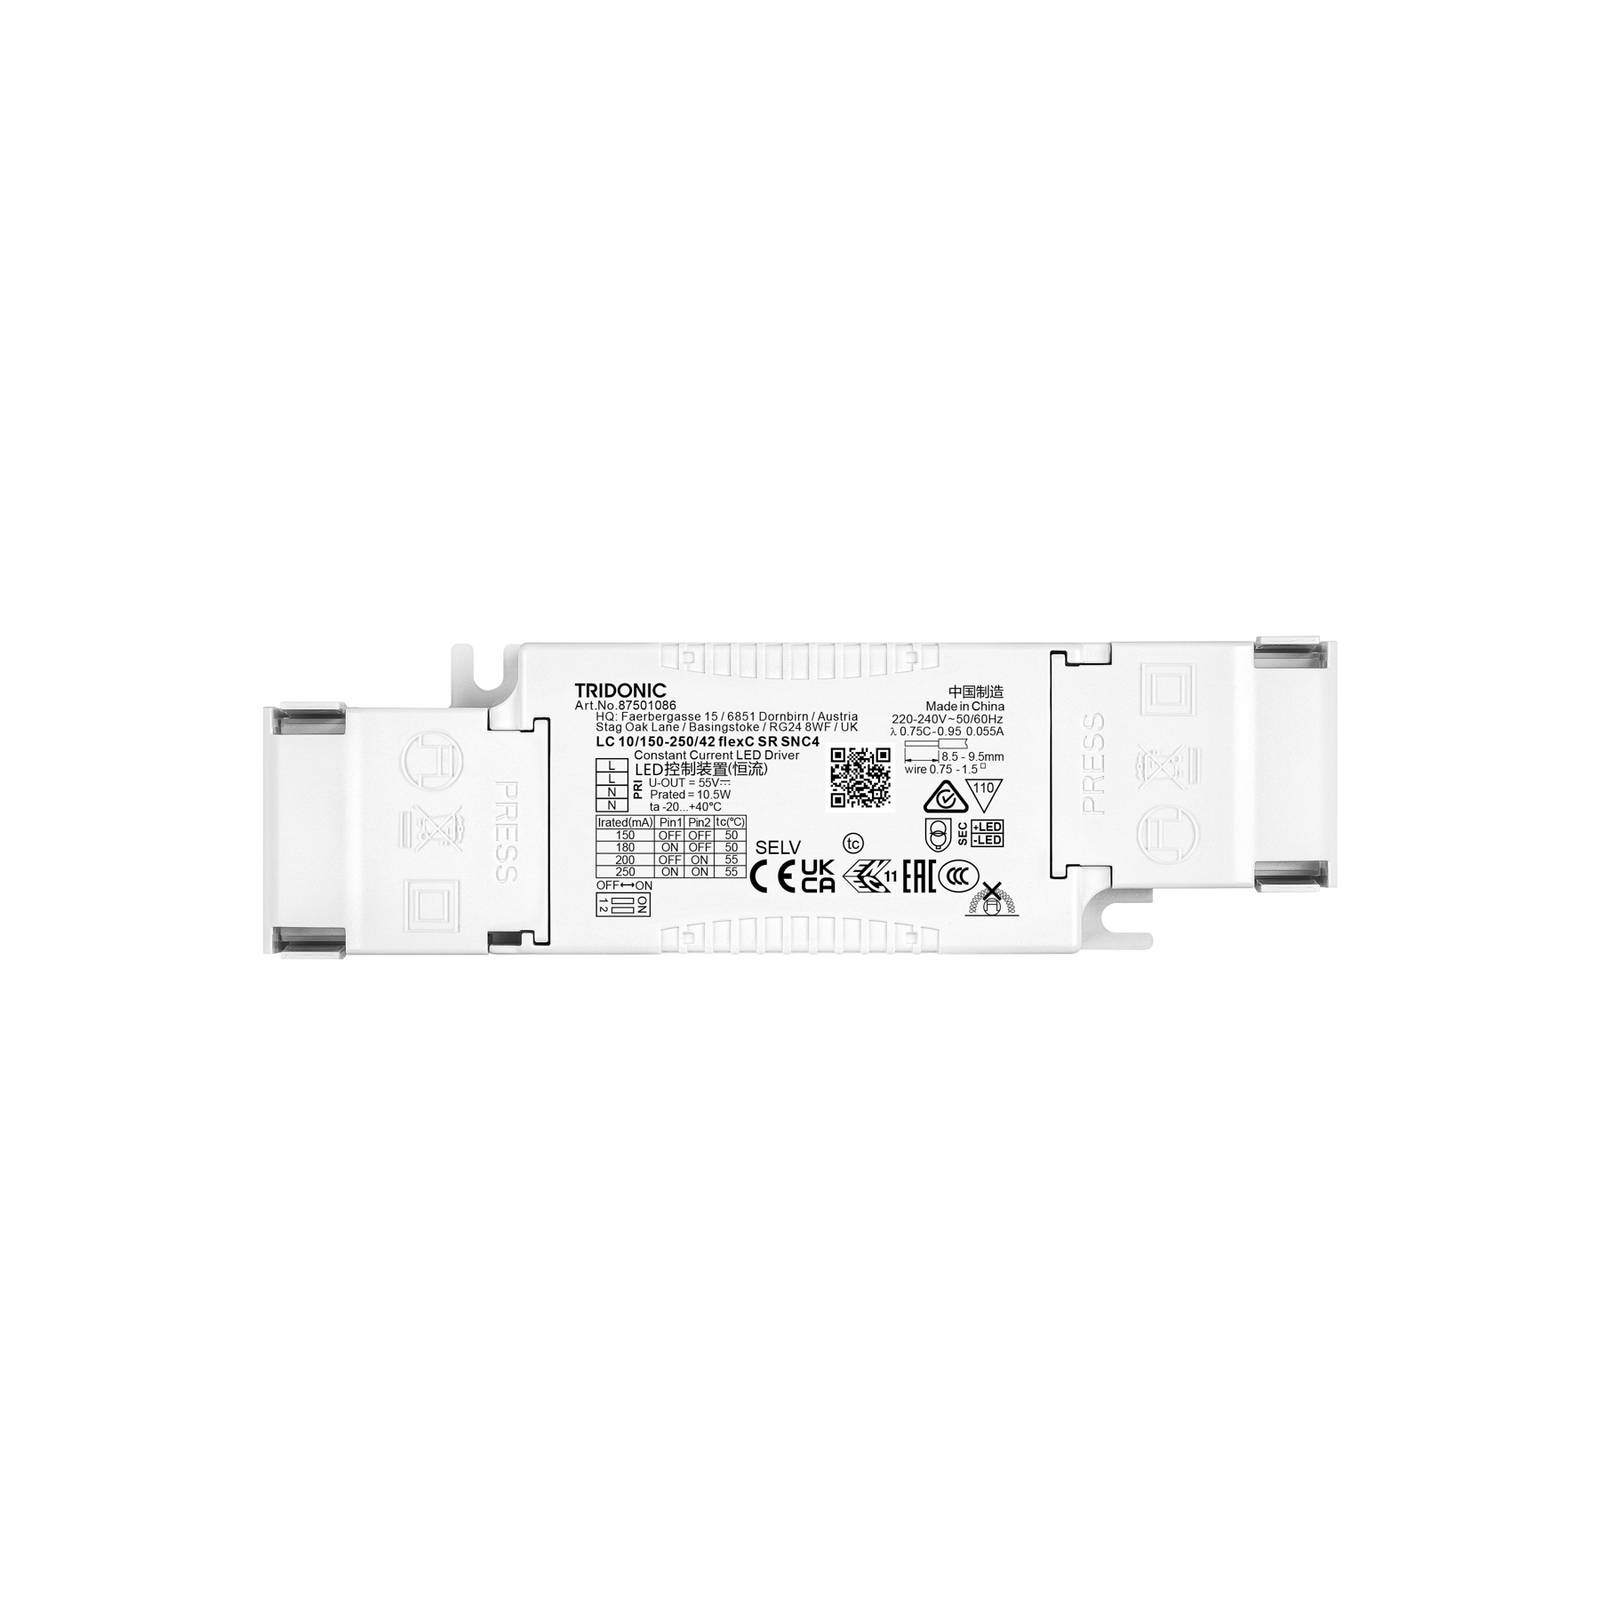 TRIDONIC LED-Kompakttreiber LC 10/150-250/42 flexC SR SNC4 von TRIDONIC